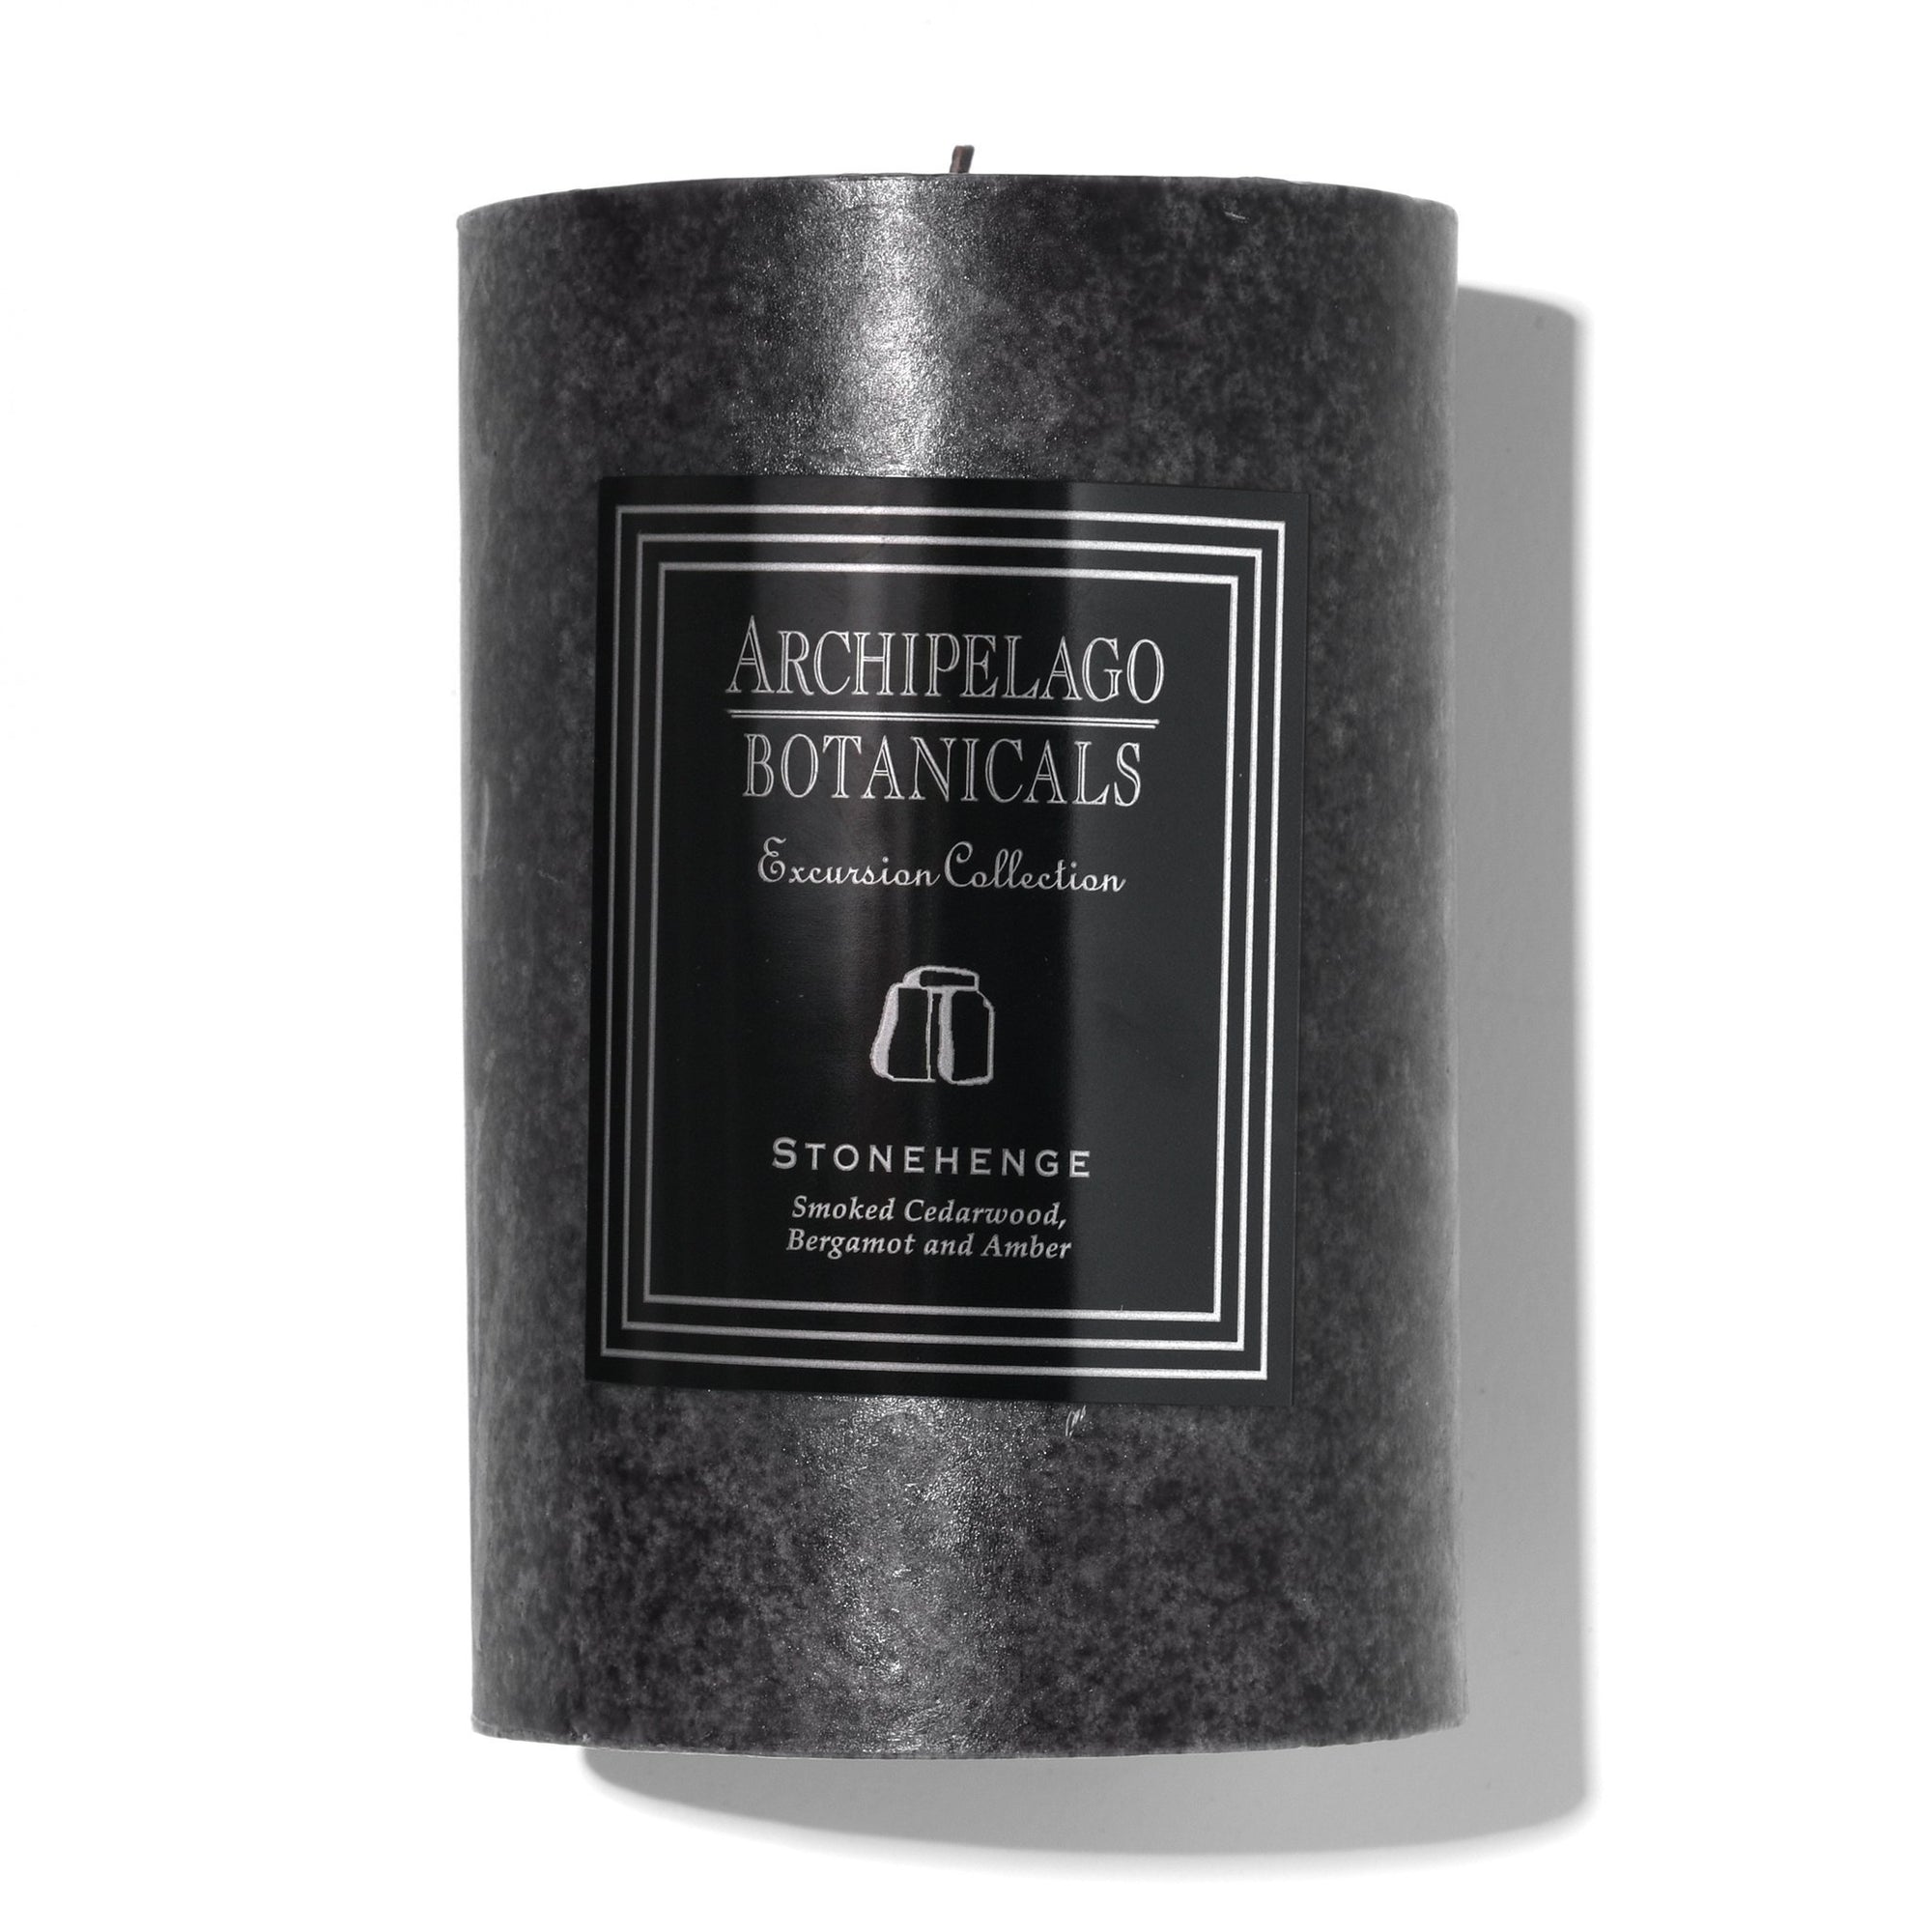 Archipelago Stonehenge Candle 4 x 6 inch  -125 hr burn time - 4 x 6 inches - AUK124S